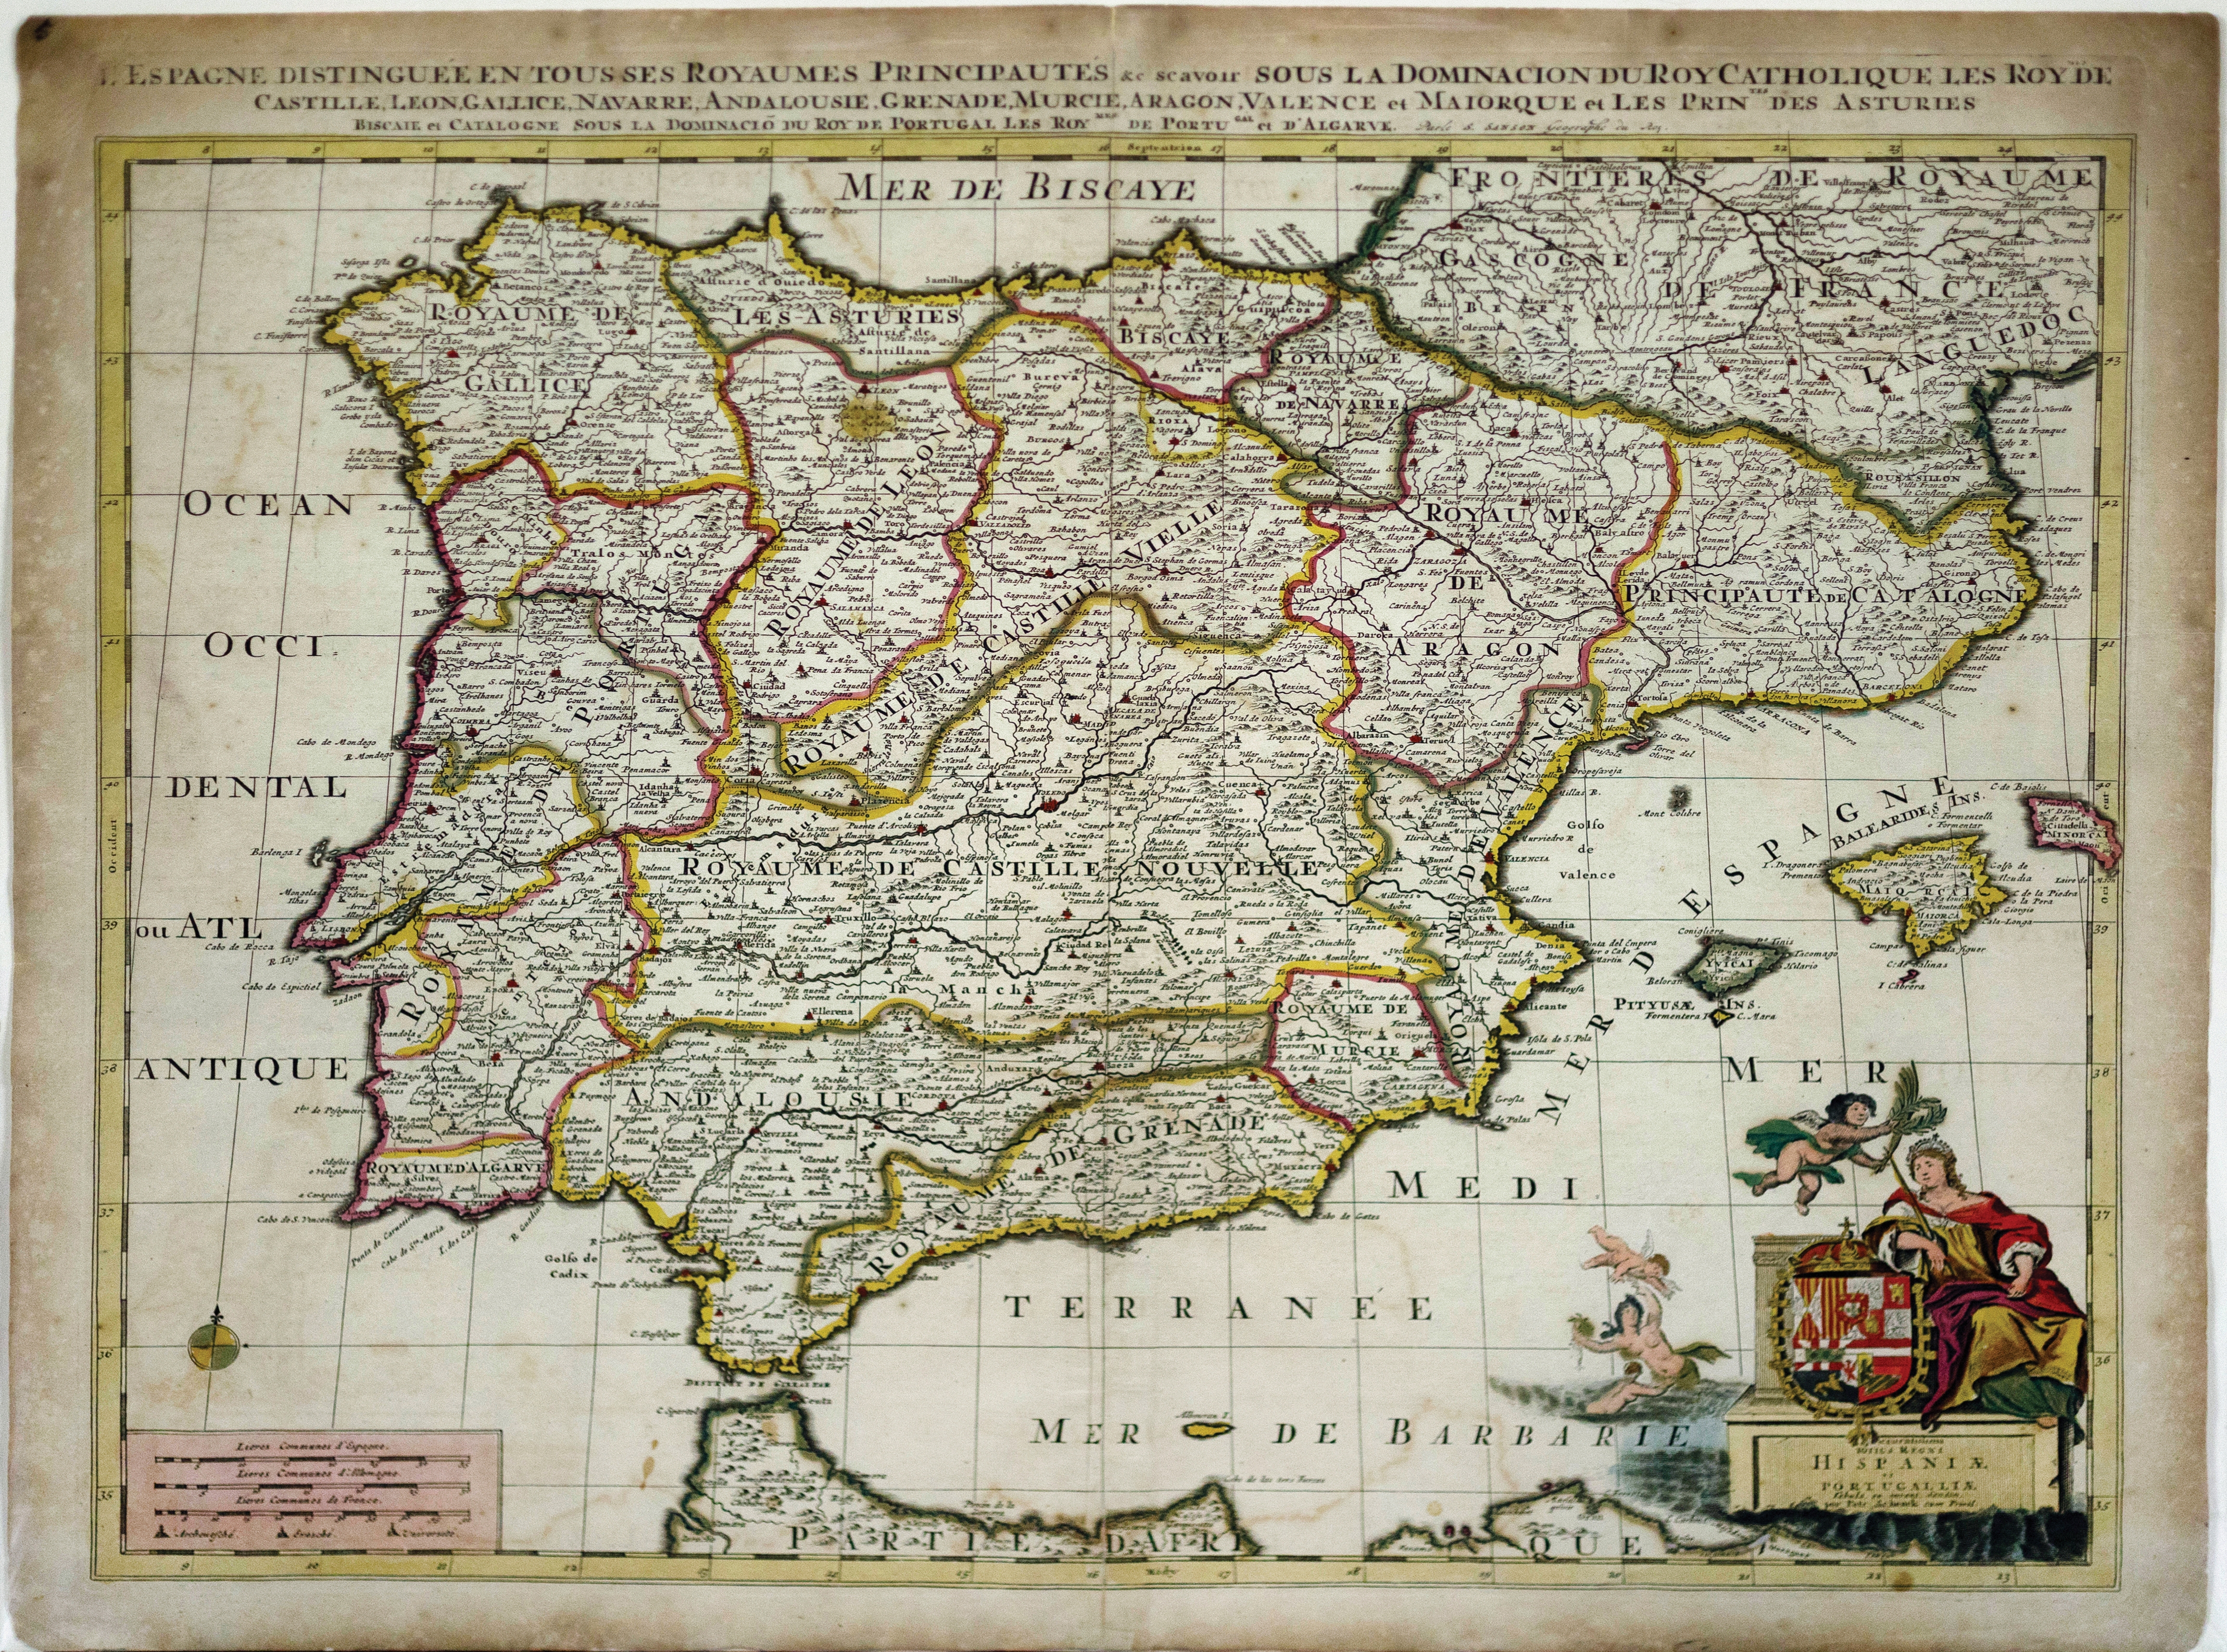 Sanson Map of the Iberian Peninsula showing Spain and Portugal - Nicolas Sanson